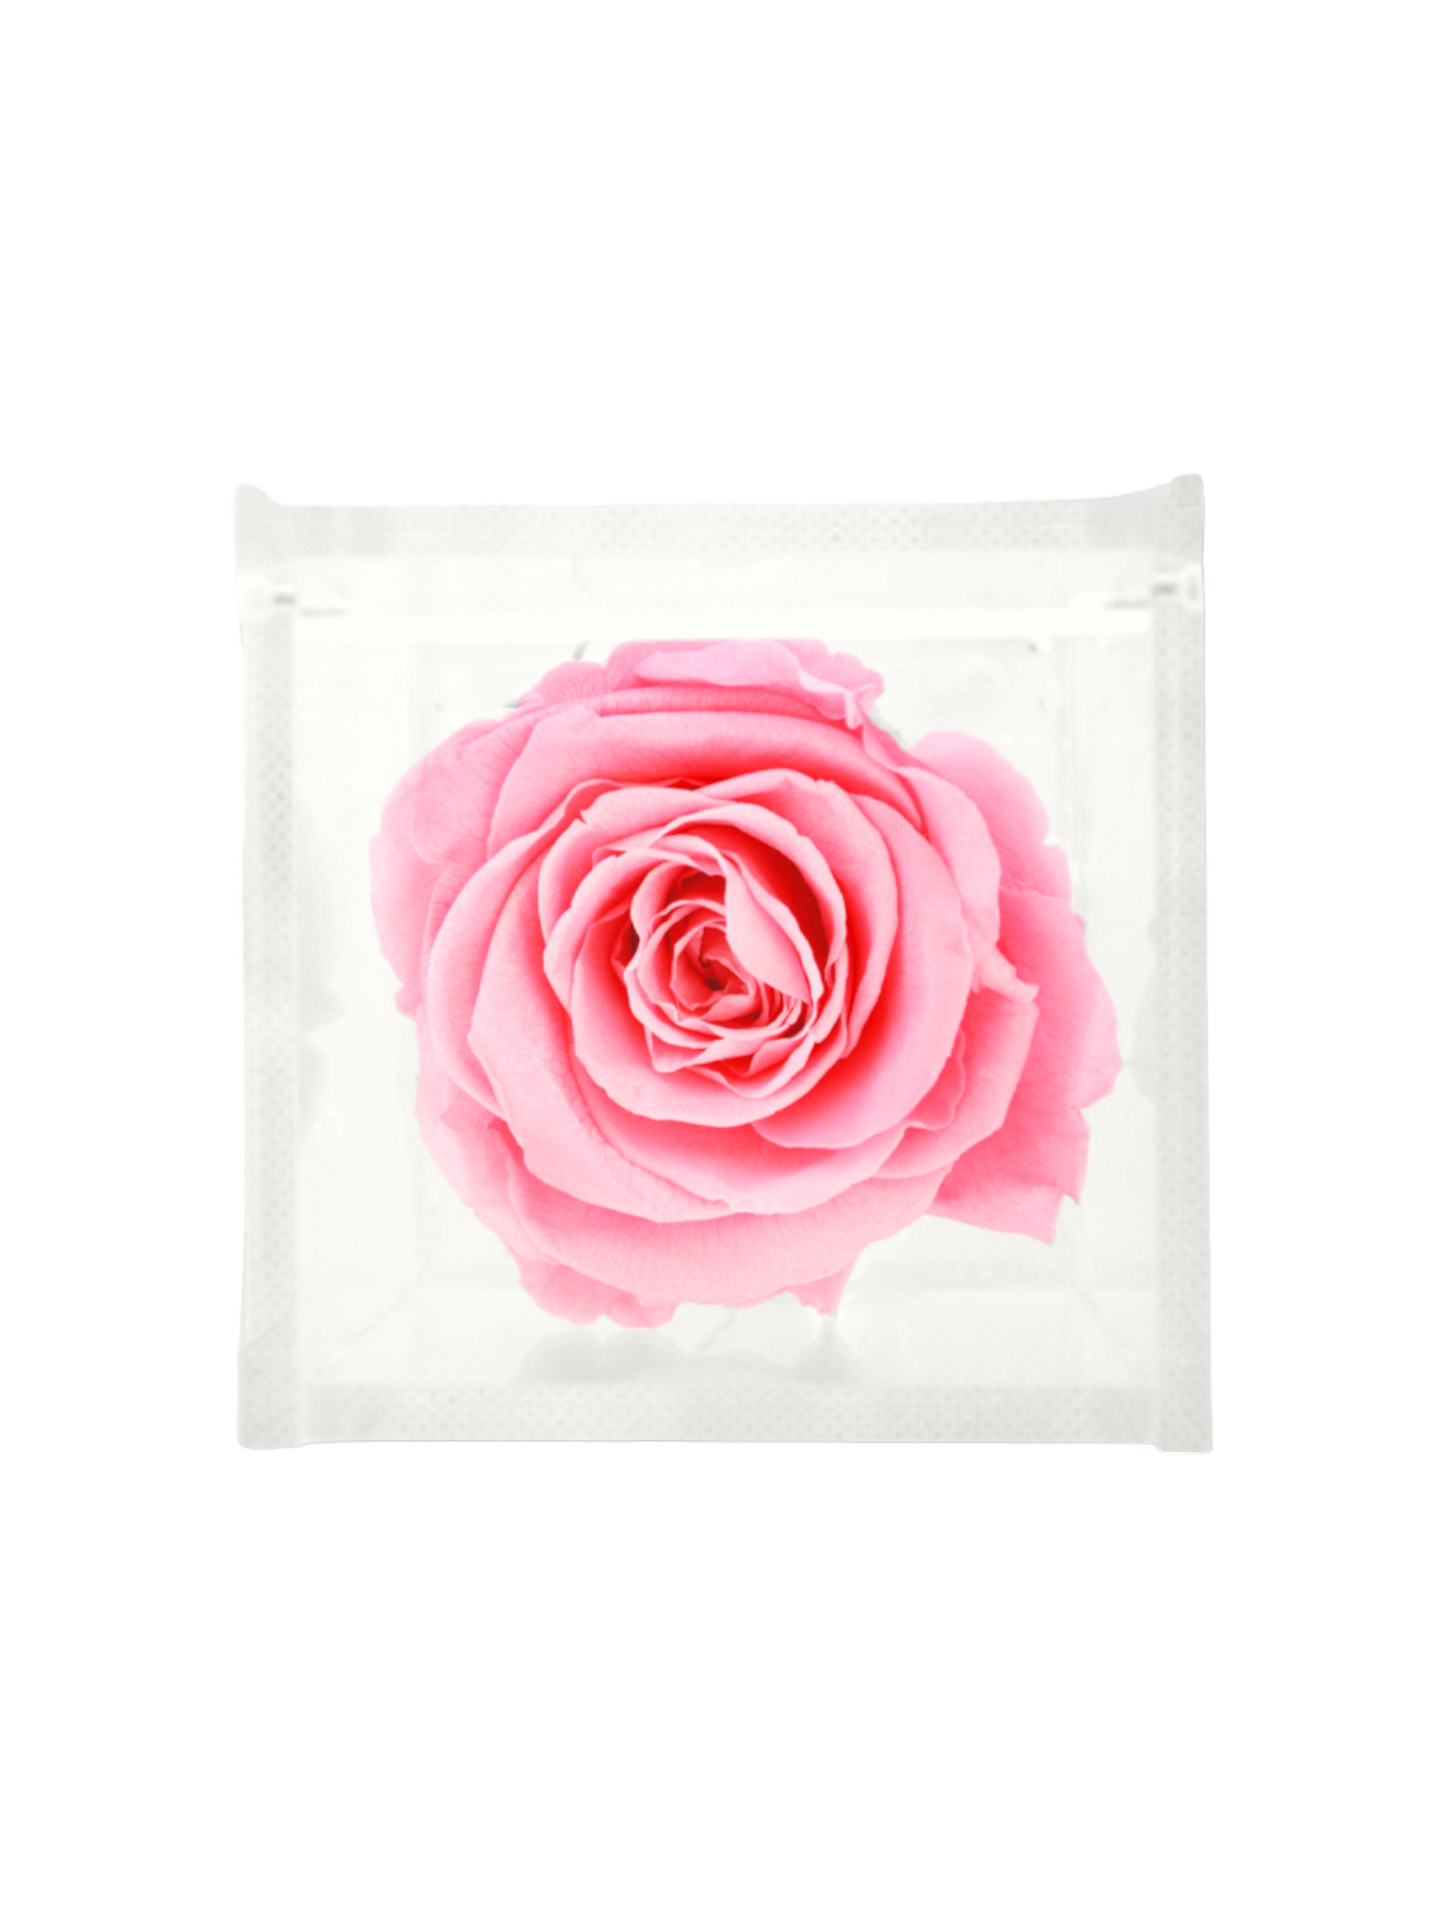 Rosa Eterna Blanca Preservada XL - Cubo Acrílico L